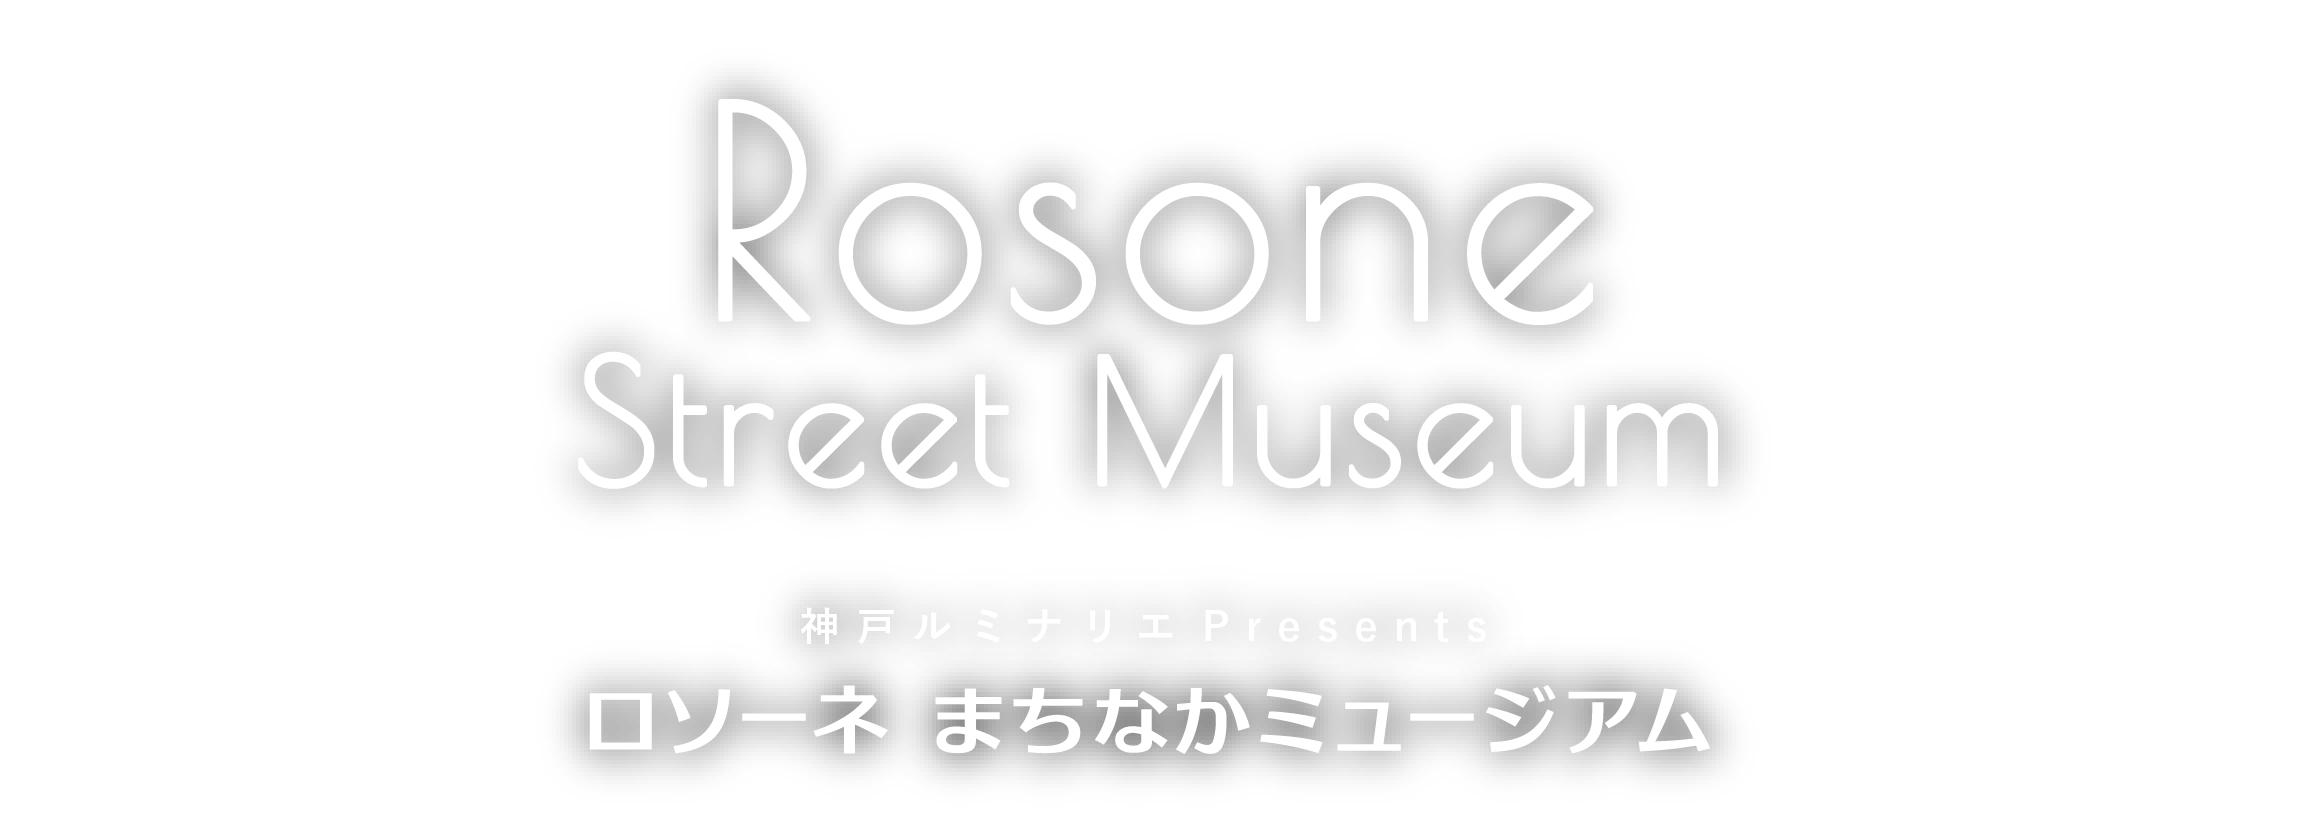 Rosone Street Museum 神戸ルミナリエPresents ロソーネ まちなかミュージアム